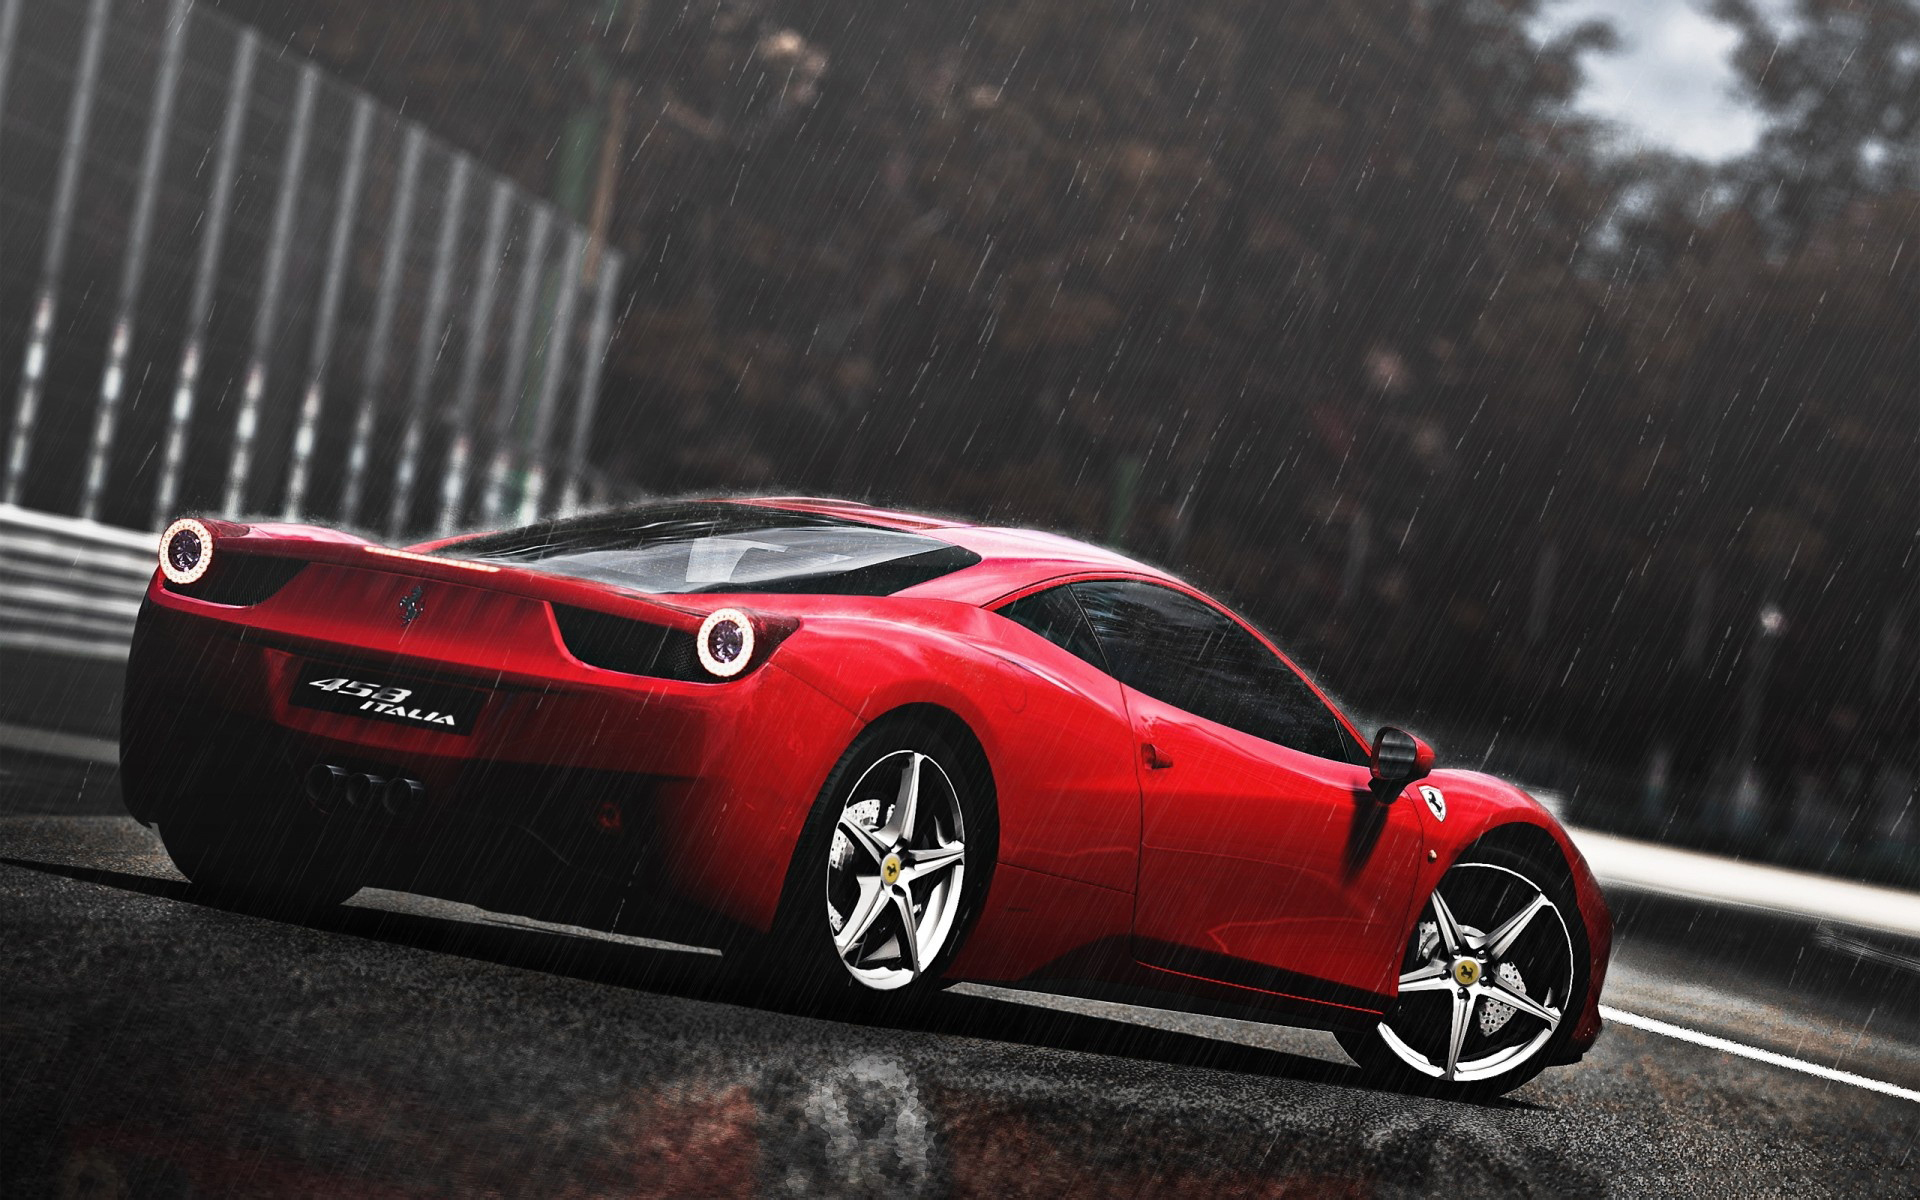 Red Ferrari Rainy Background Gallery Yopriceville   High